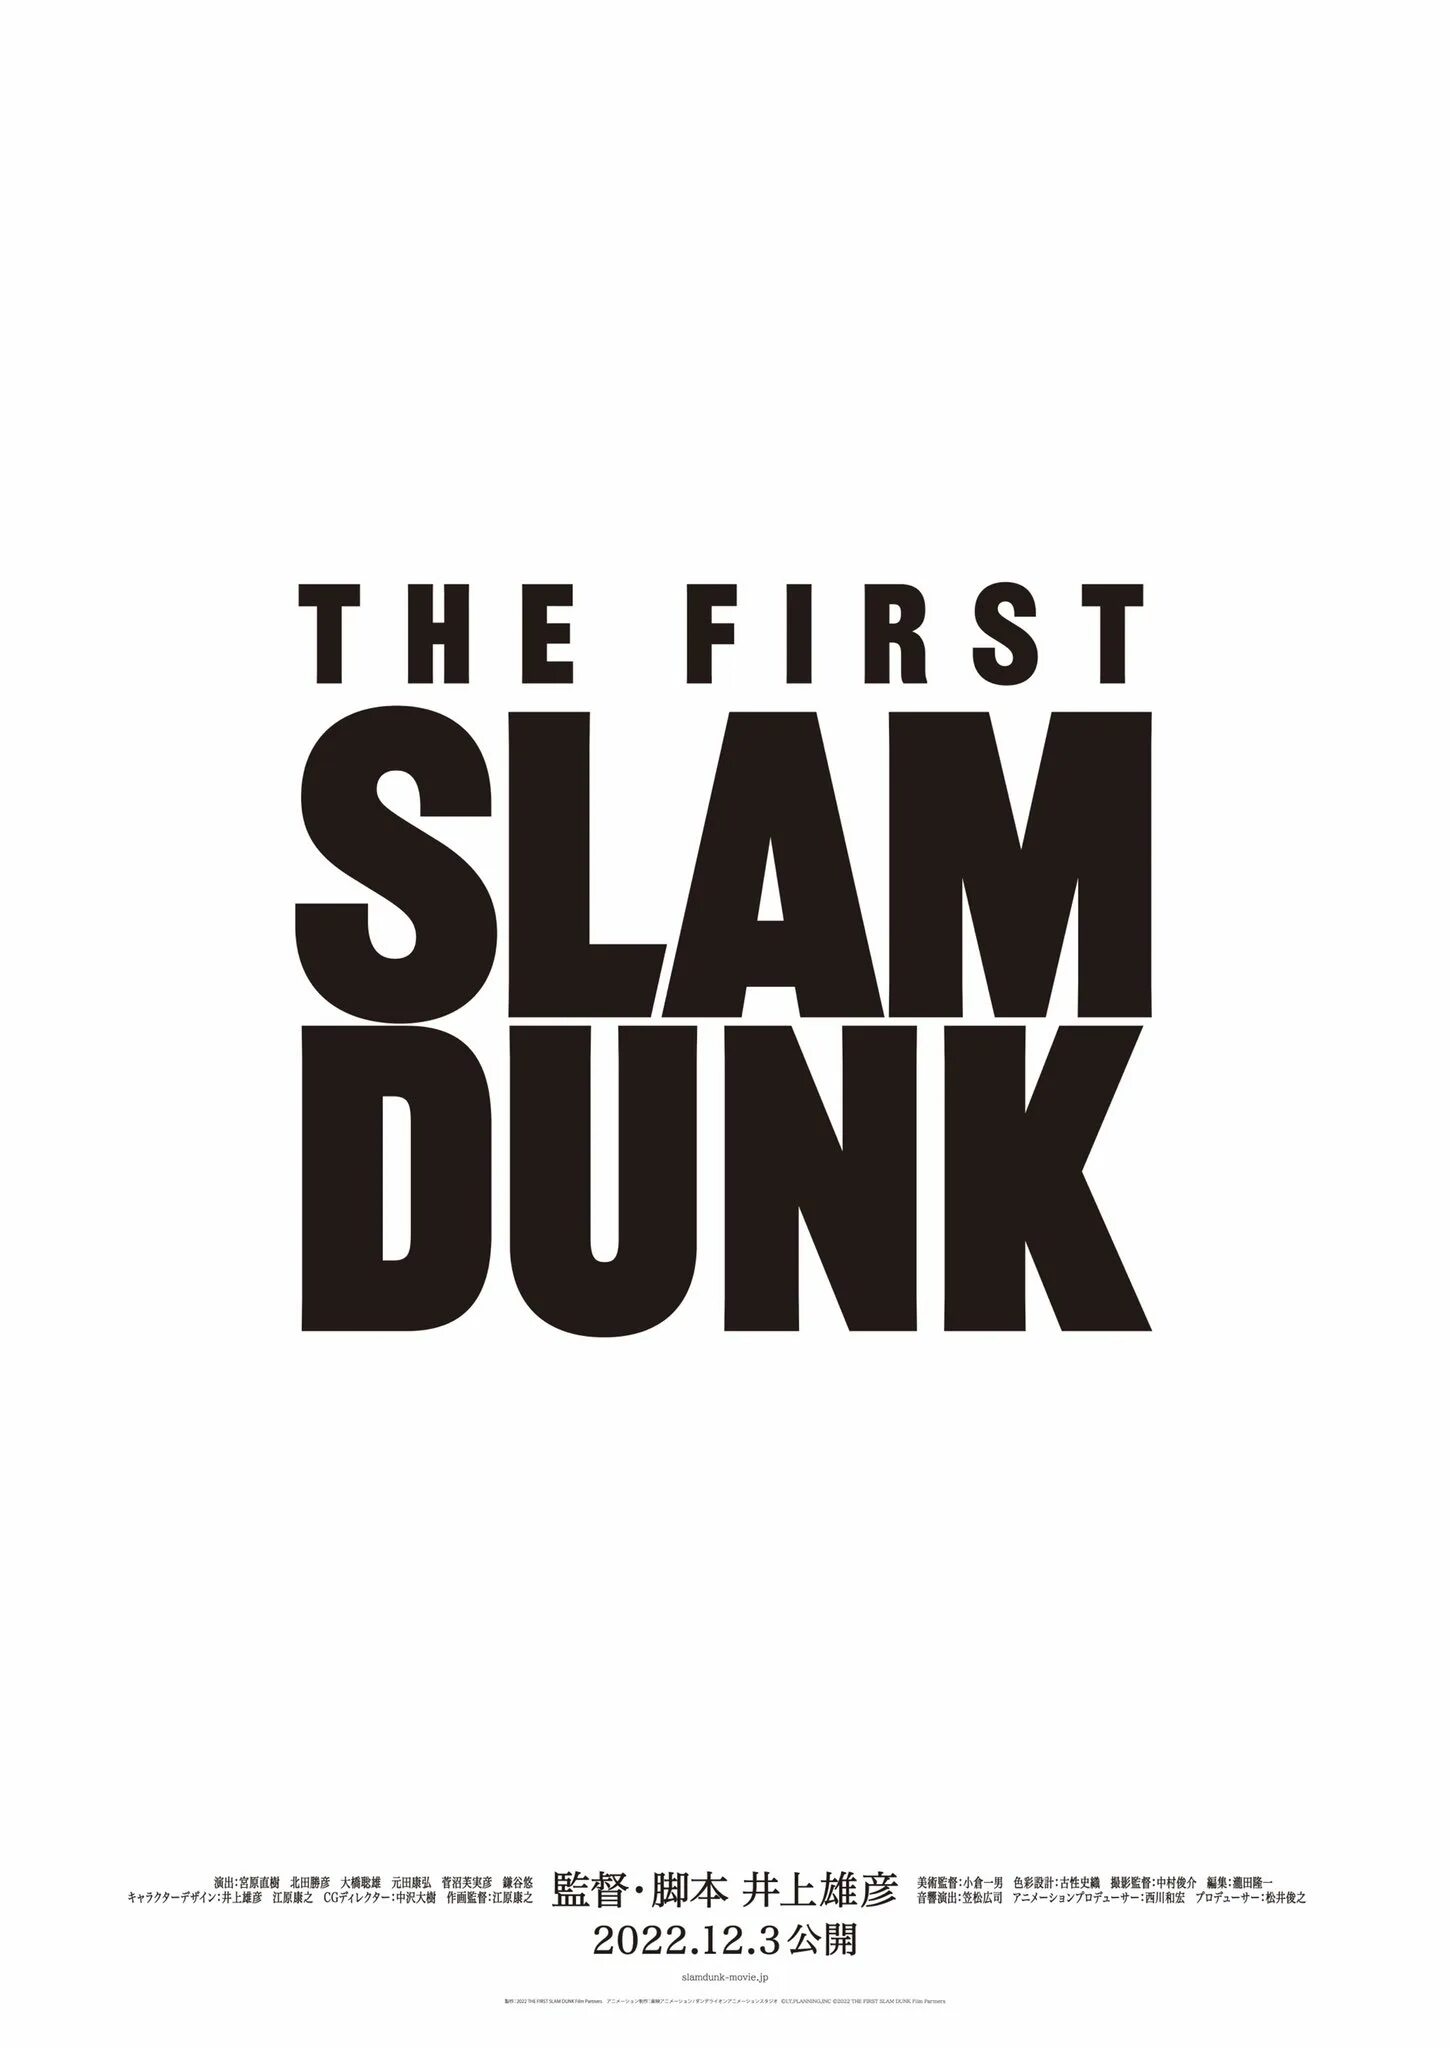 First slam. The first Slam Dunk poster. Slam Dunk тарелка одноразовая. Данк Хэллоуин 2021.